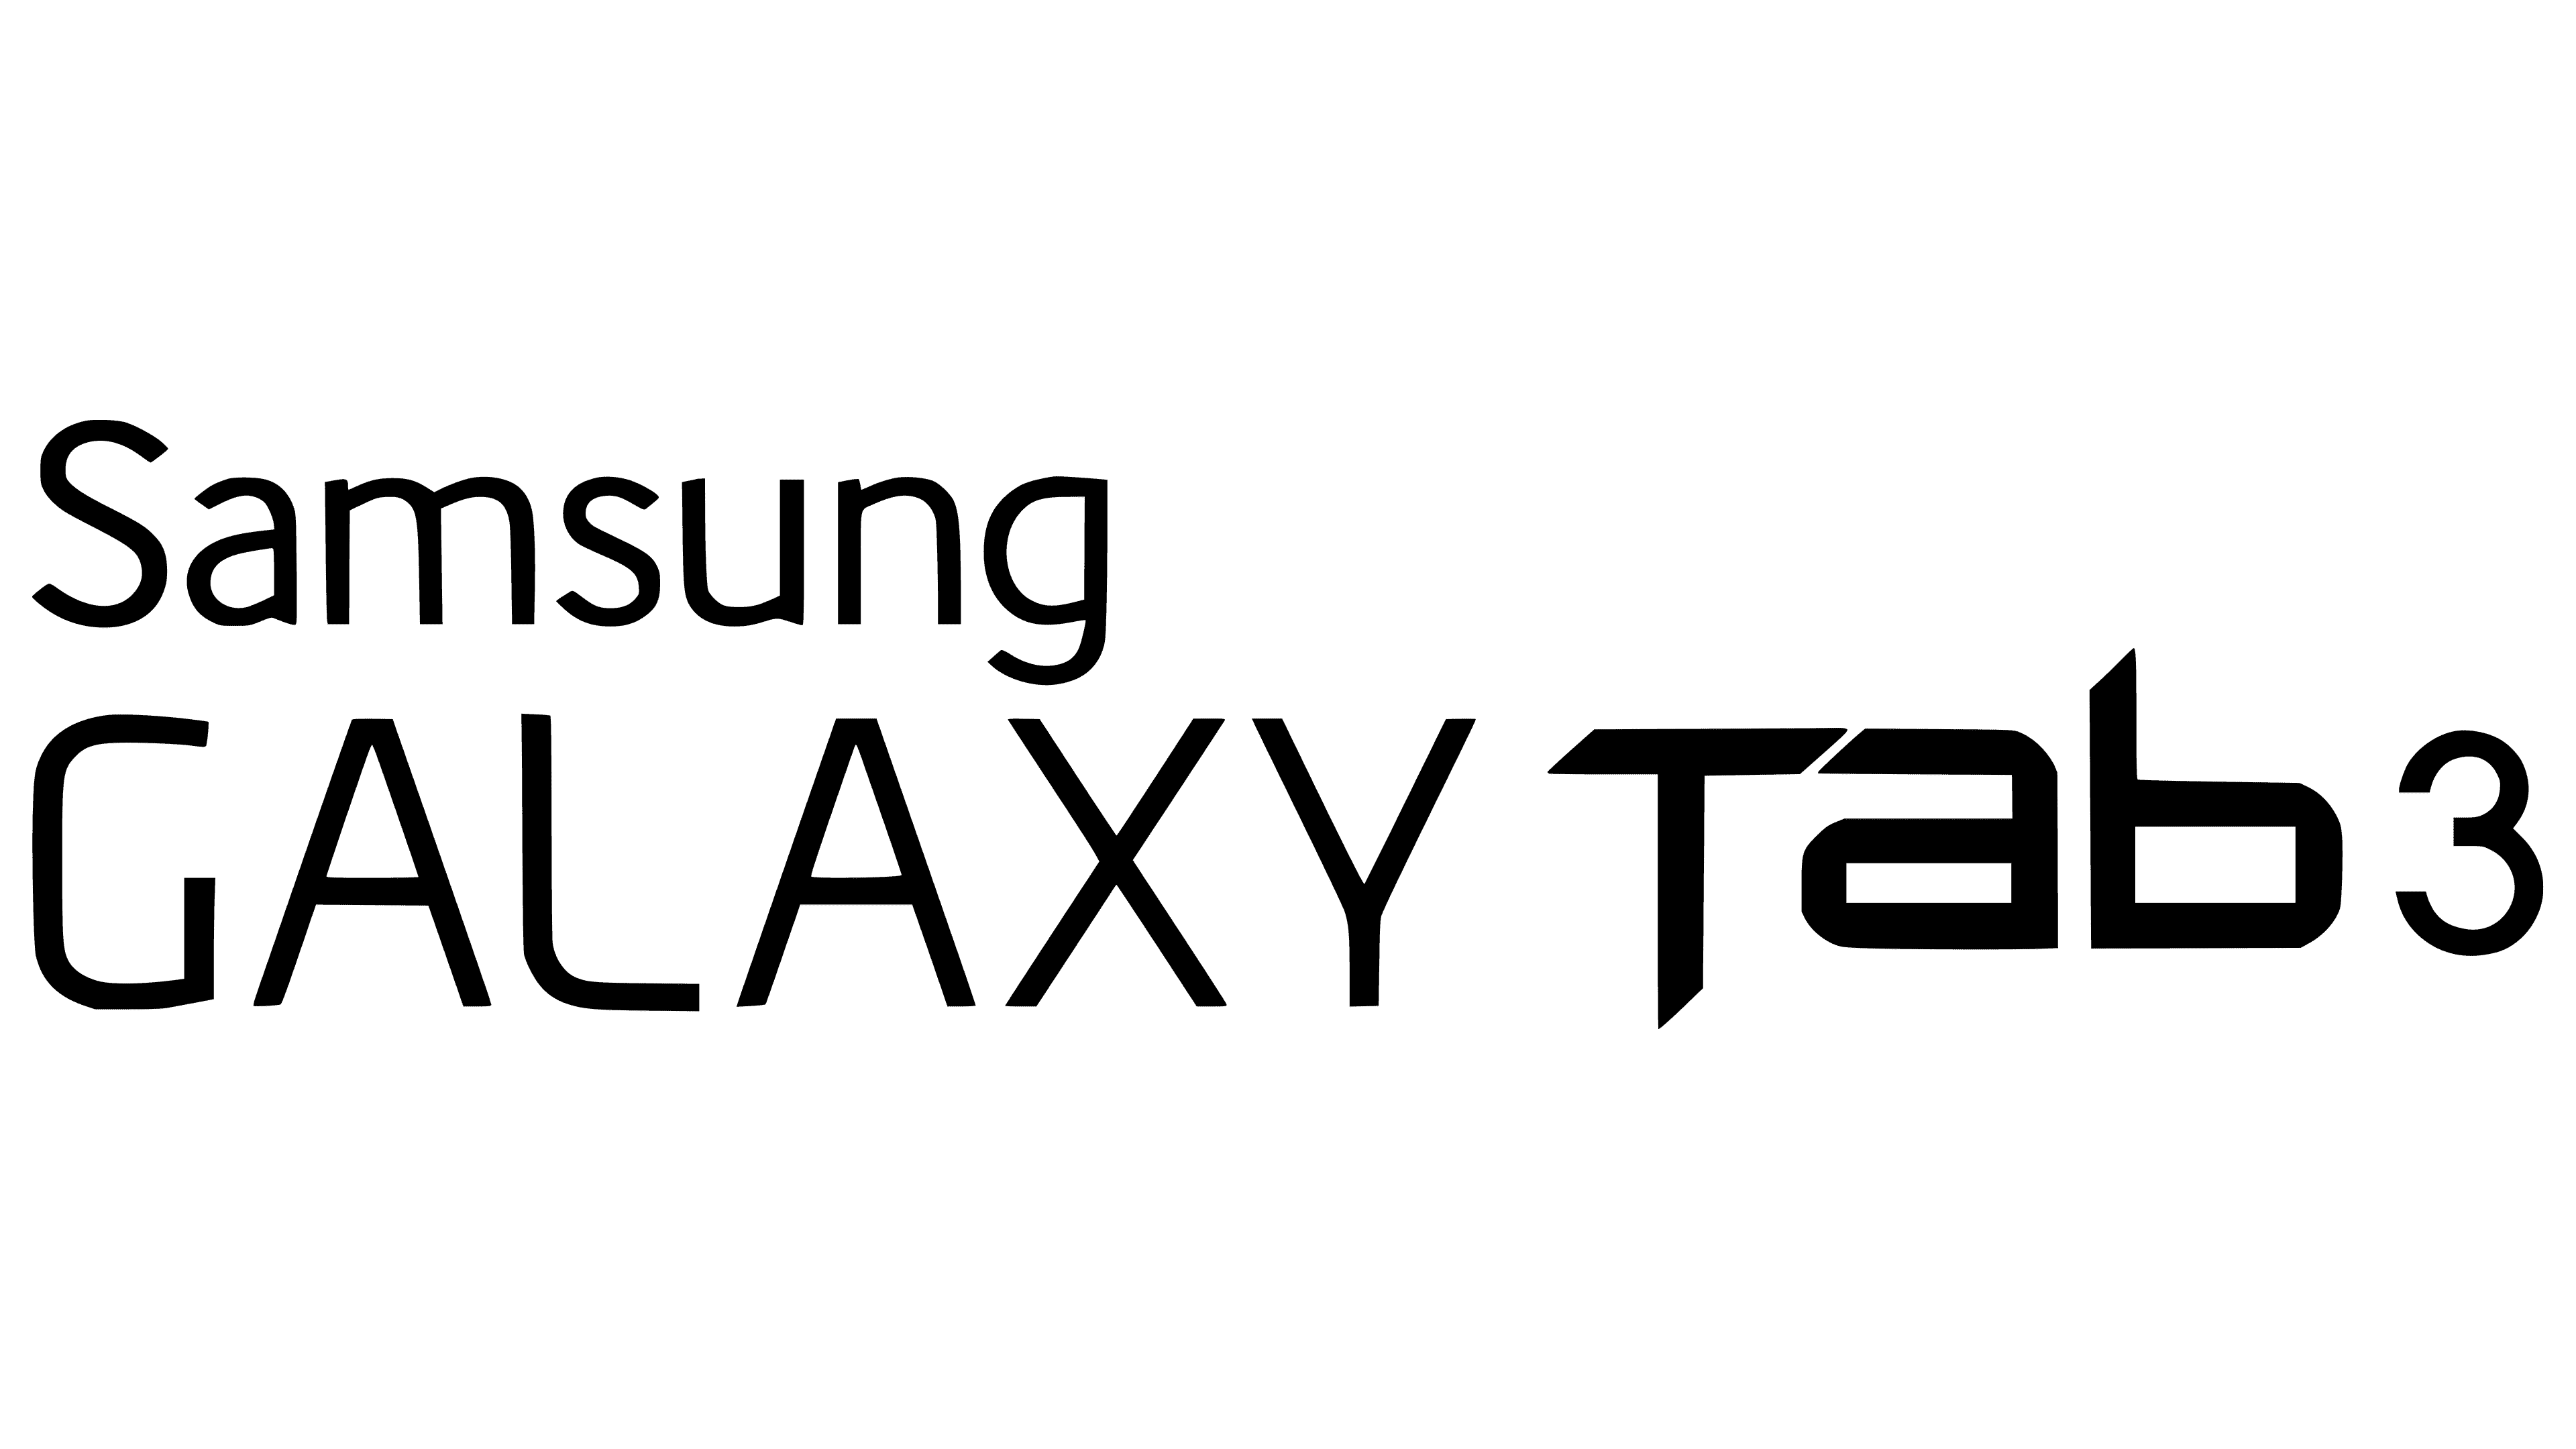 Samsung White Logo Wallpaper Download | MobCup